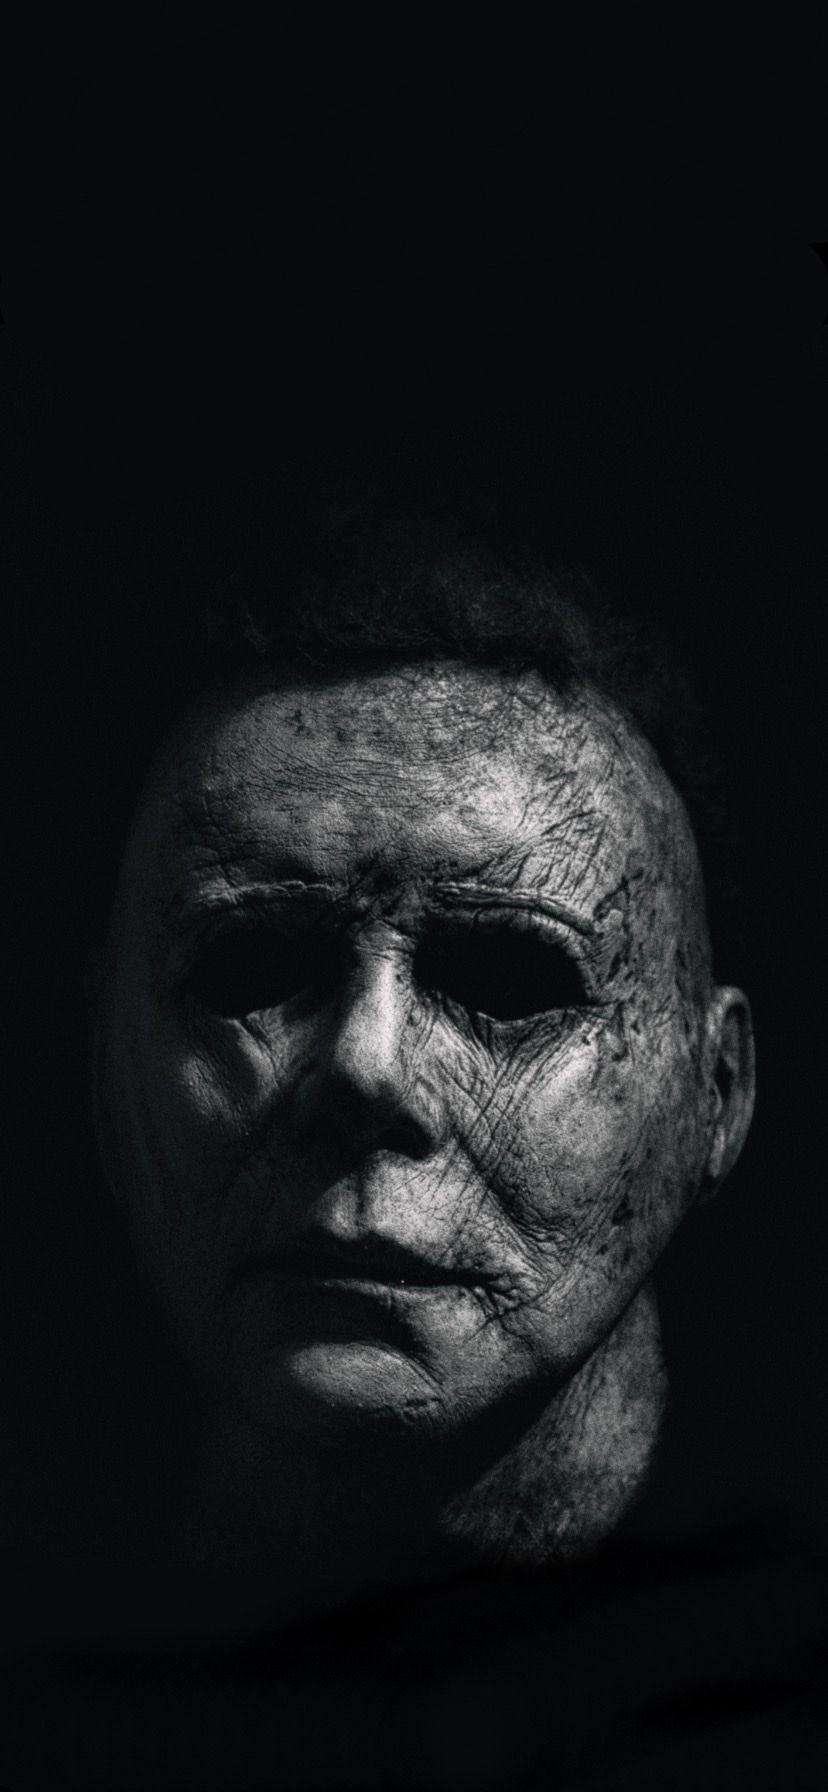 Wallpaper ID 446181  Movie Halloween Kills Phone Wallpaper Michael Myers  720x1280 free download